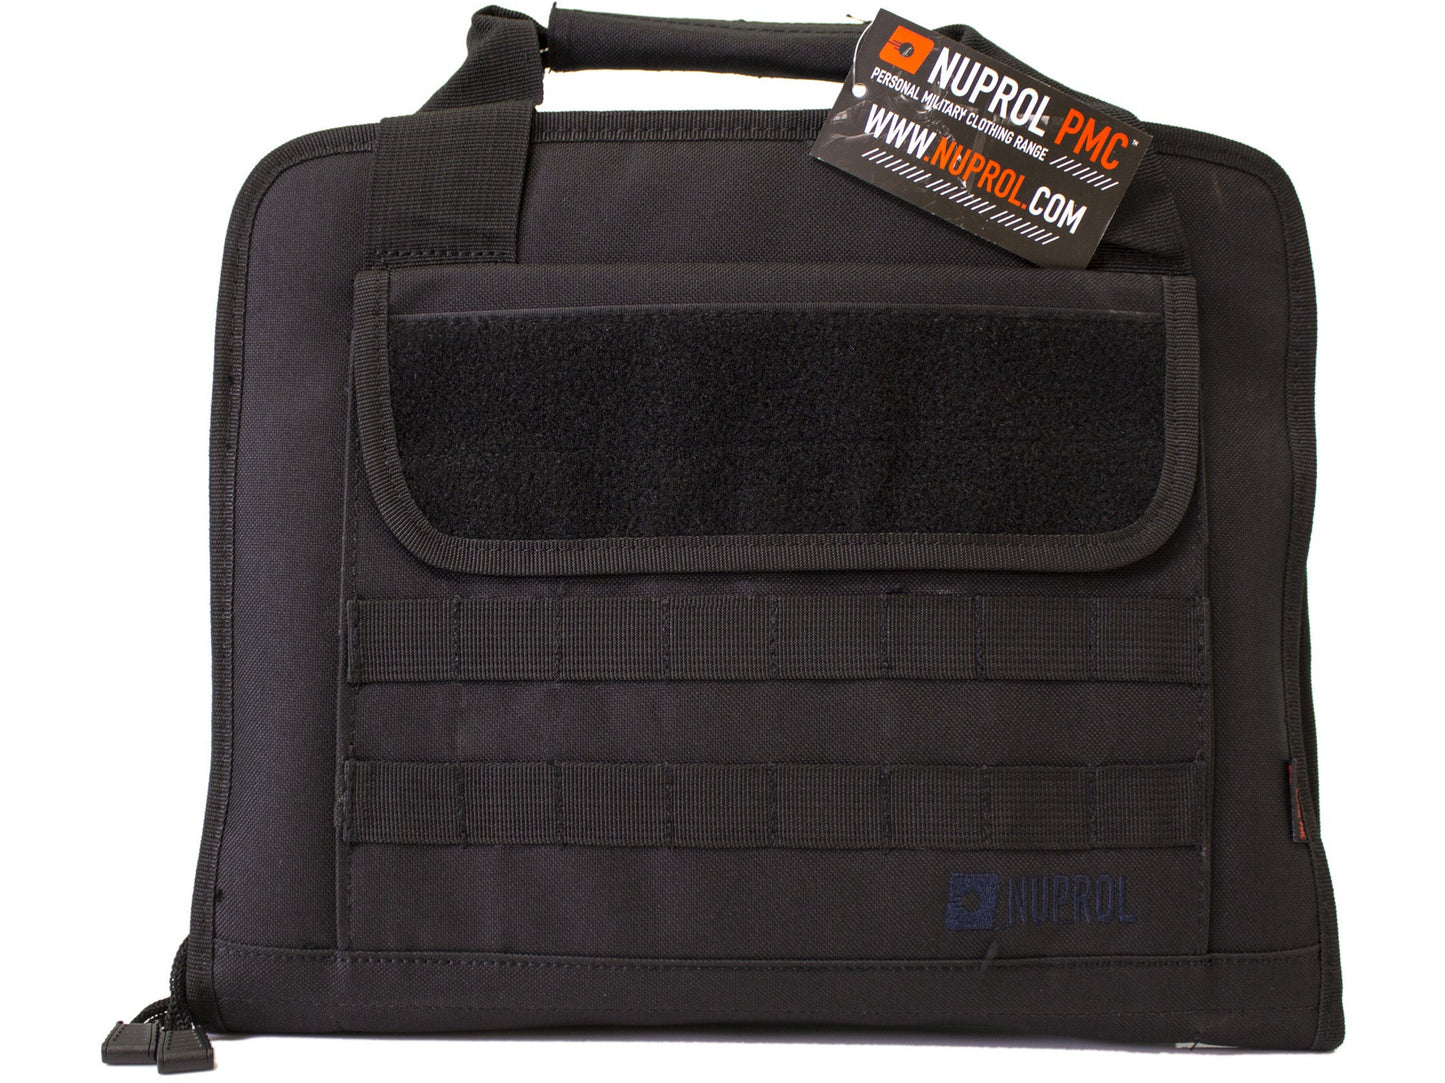 Nuprol PMC Deluxe Pistol Bag - Black